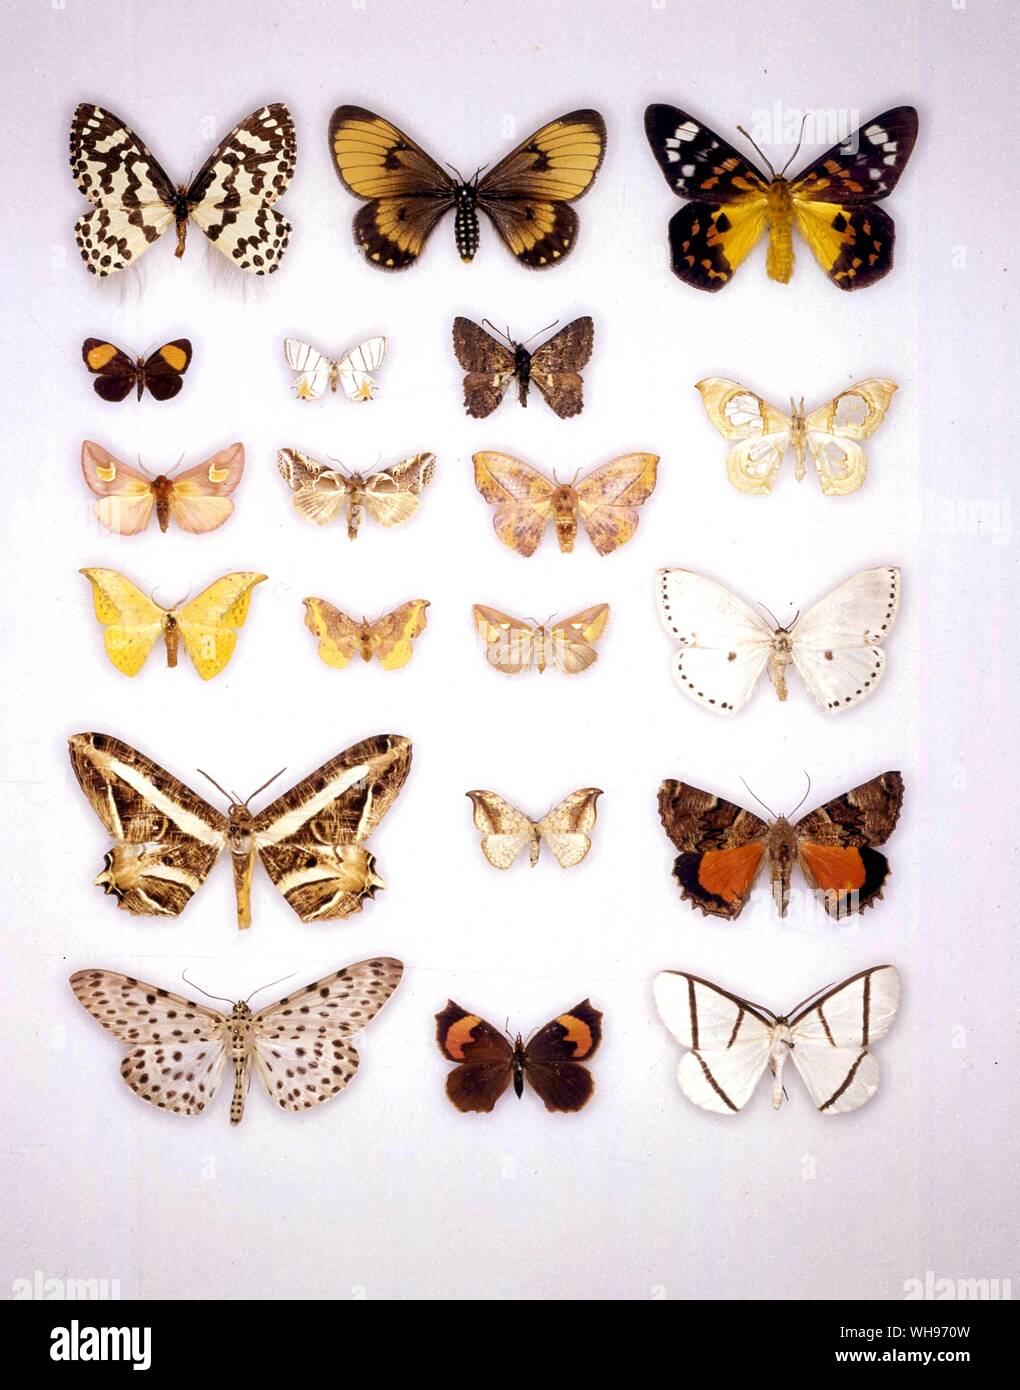 Papillons papillons/- (de gauche à droite), Hibrildes Pterothysanus noblei norax, Dysphania cuprina - (deuxième rangée de gauche à droite) Callidula lunigera Epiplema Apoprogenes, hesperistis himala, - (troisième rangée de gauche à droite) Epicmelia abrosyne theresiae, scripta, Oreta singapura - beige pâle (un en milieu droit des lignes 2 et 3) Macrauzata - maxima (quatrième rangée de gauche à droite) Tridrepana flava, Oreta rosea, Axia margarita, Cyclidia dictyaria - (5e rangée de gauche à droite) Erebomorpha fulguritia Catacalopsis, Drepanum falcataria, medinae - (Percnia felinaria sixième rangée), Podargus felderi Carpella, districta Banque D'Images